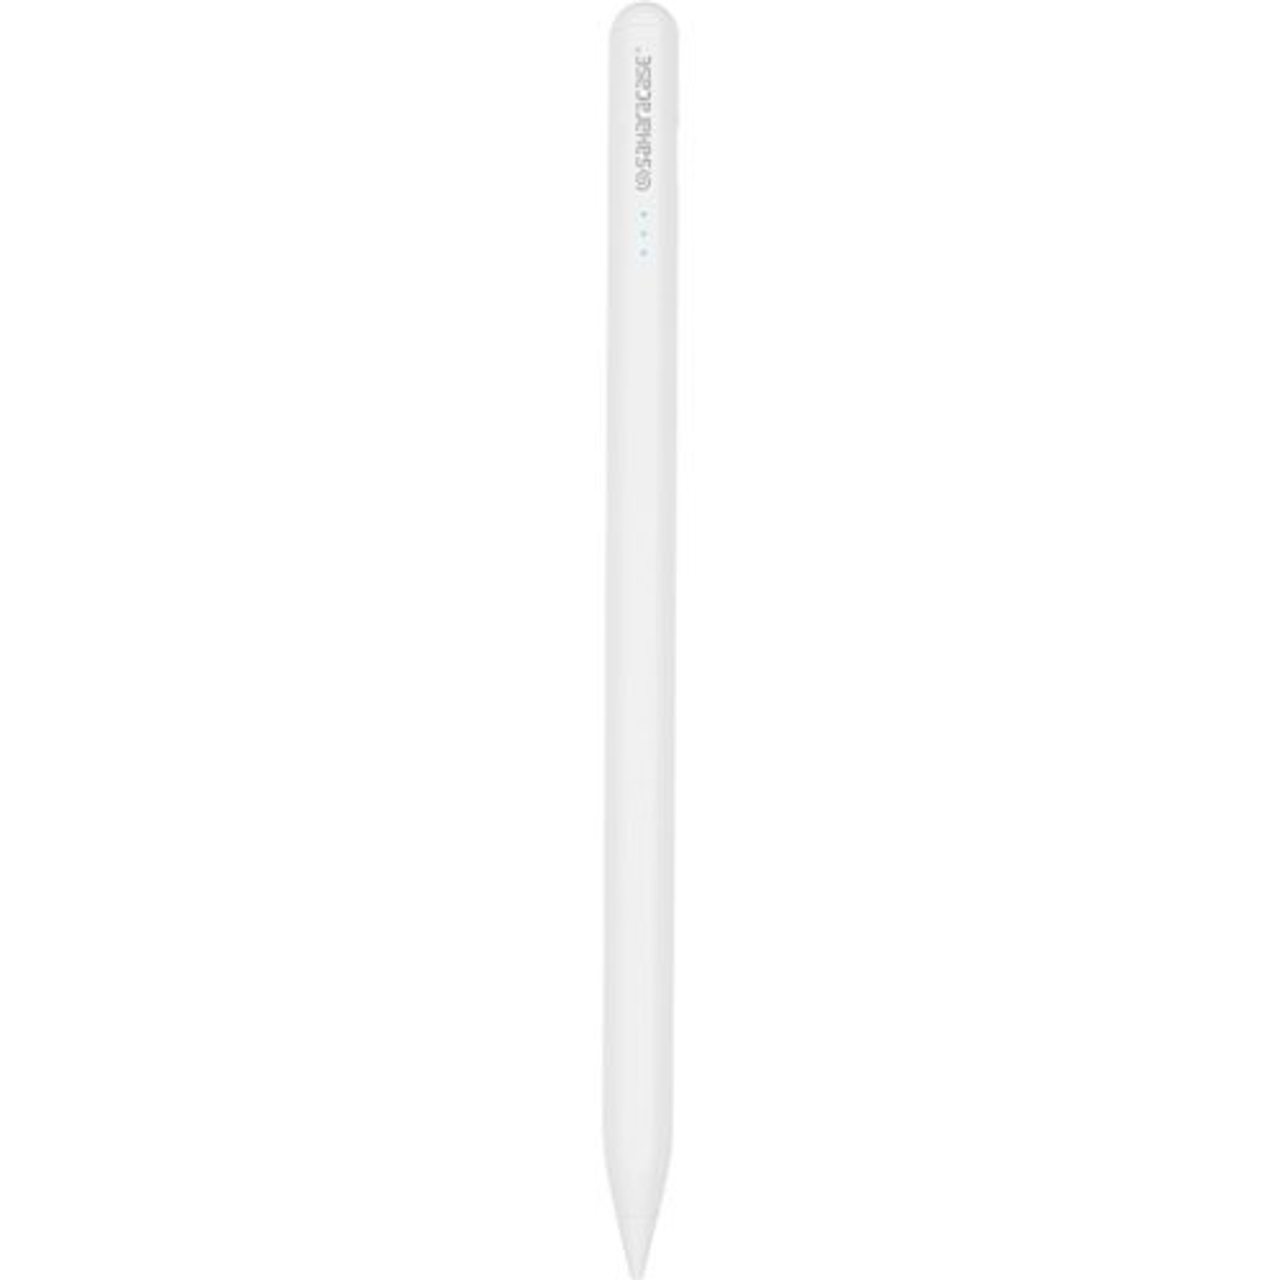 SaharaCase - Palm Rejection Universal Stylus Pen - White